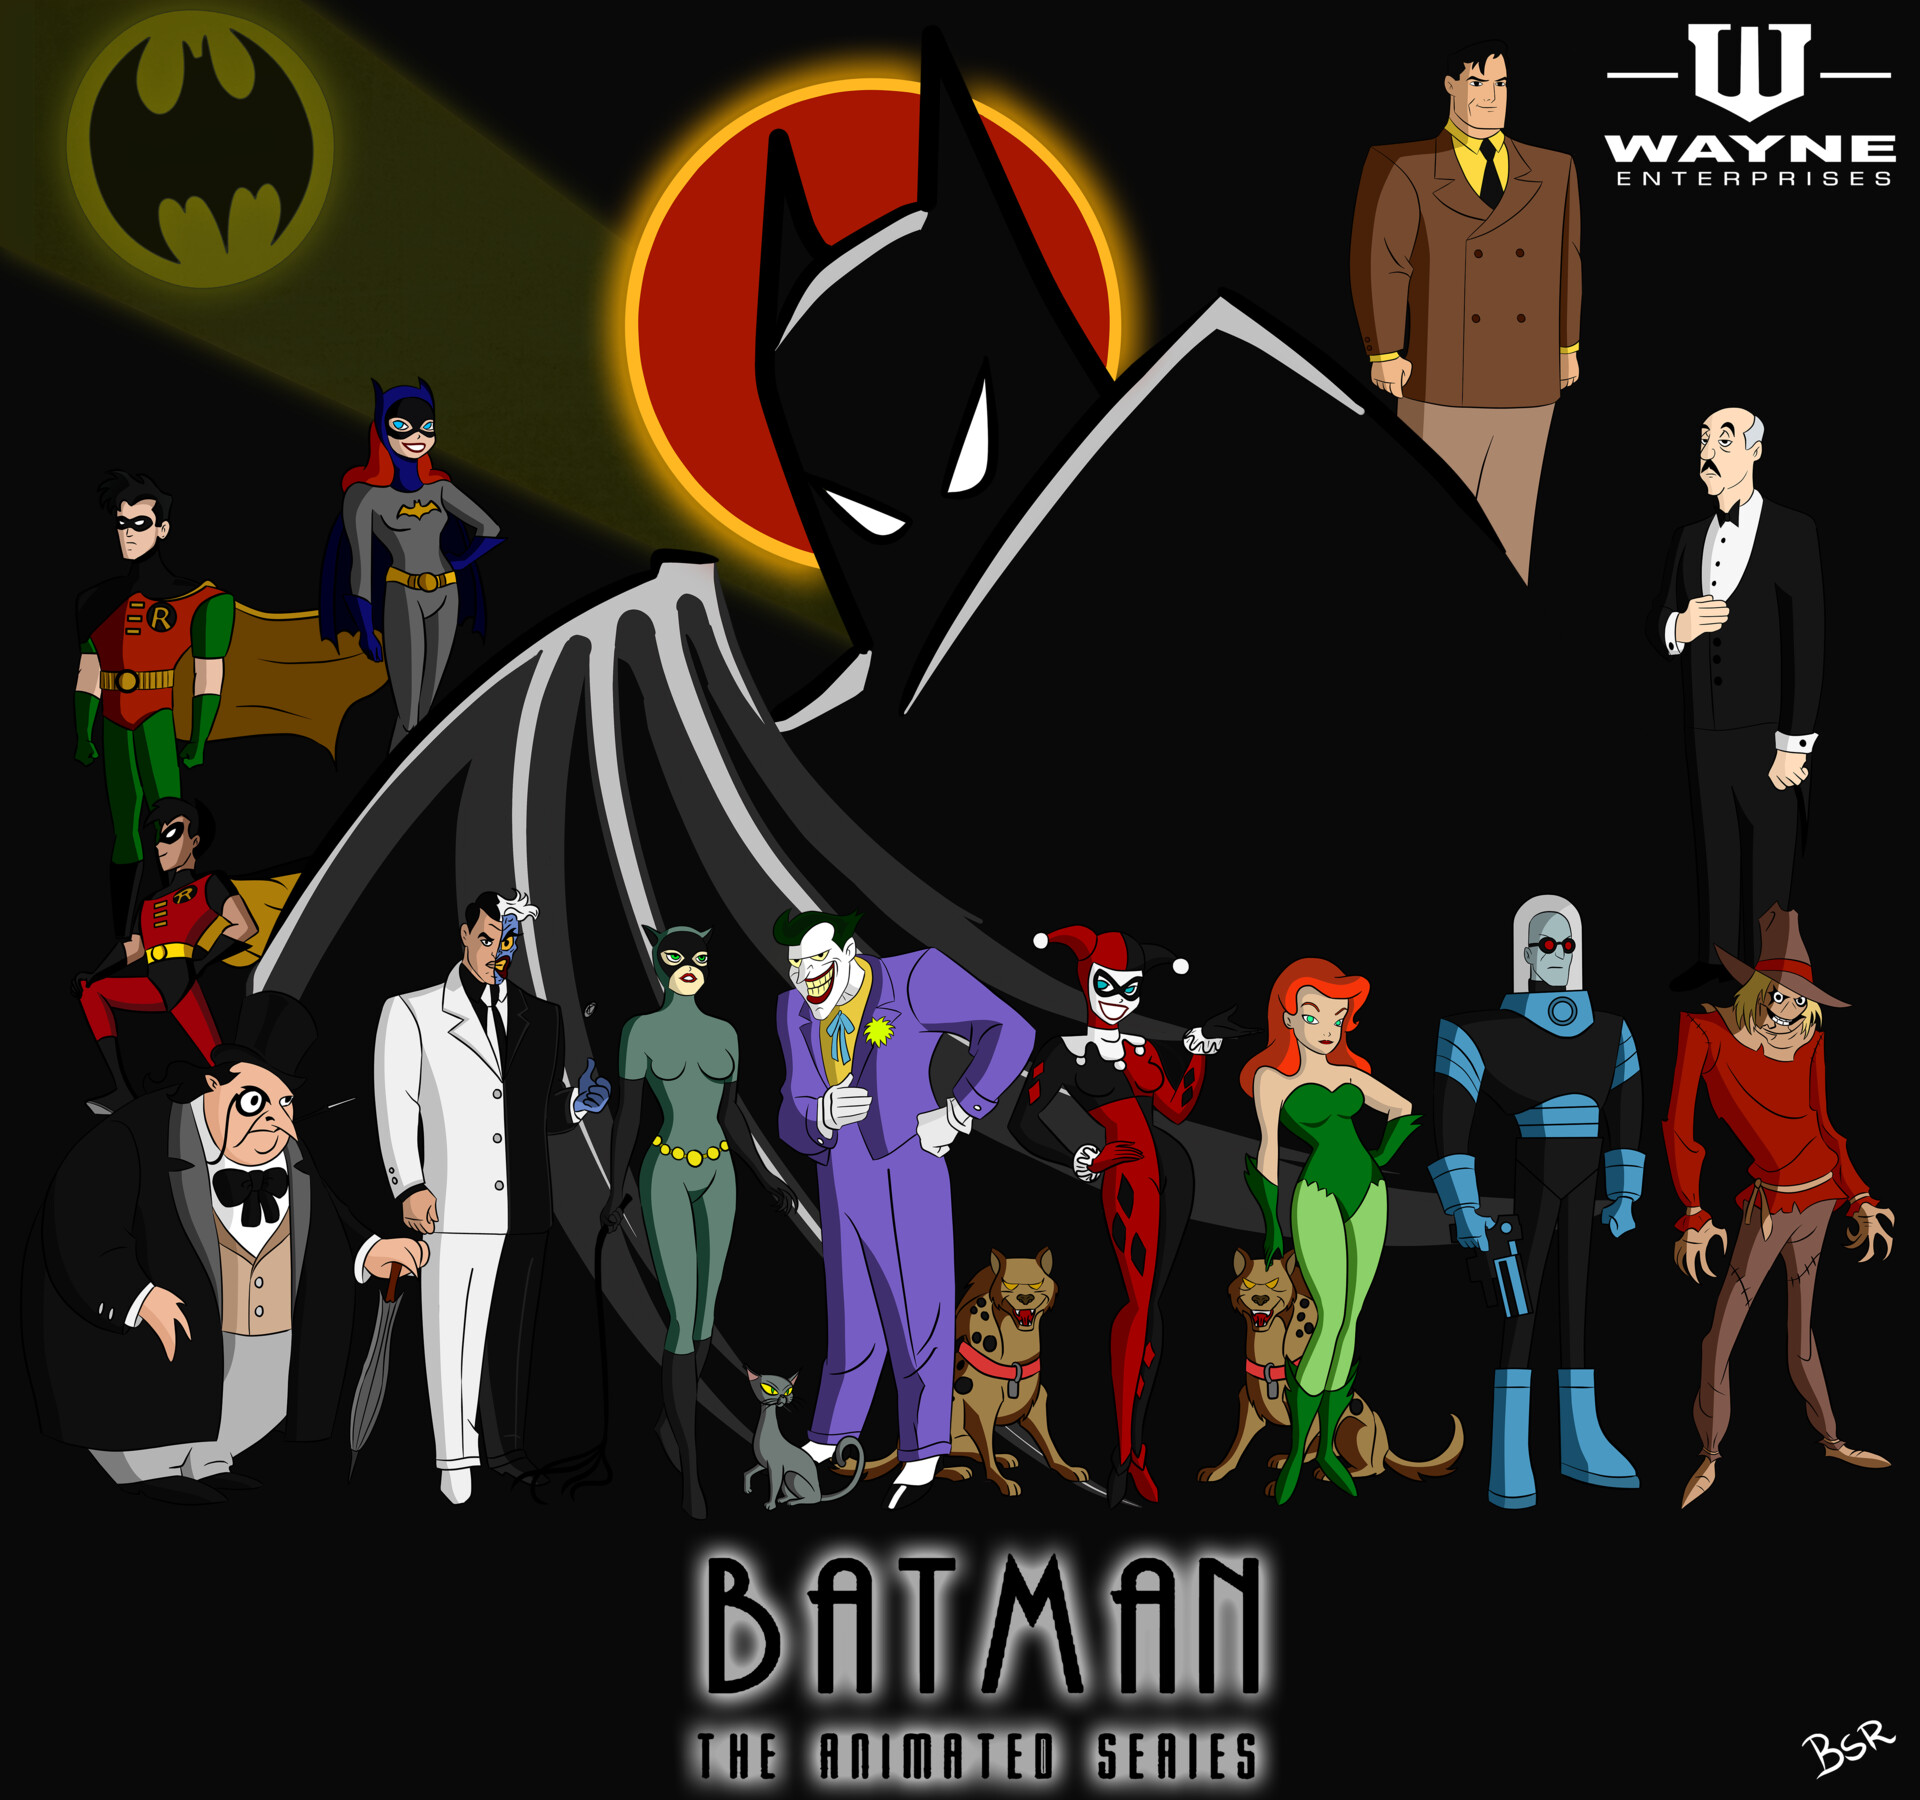 ArtStation - Batman: The Animated Series Poster